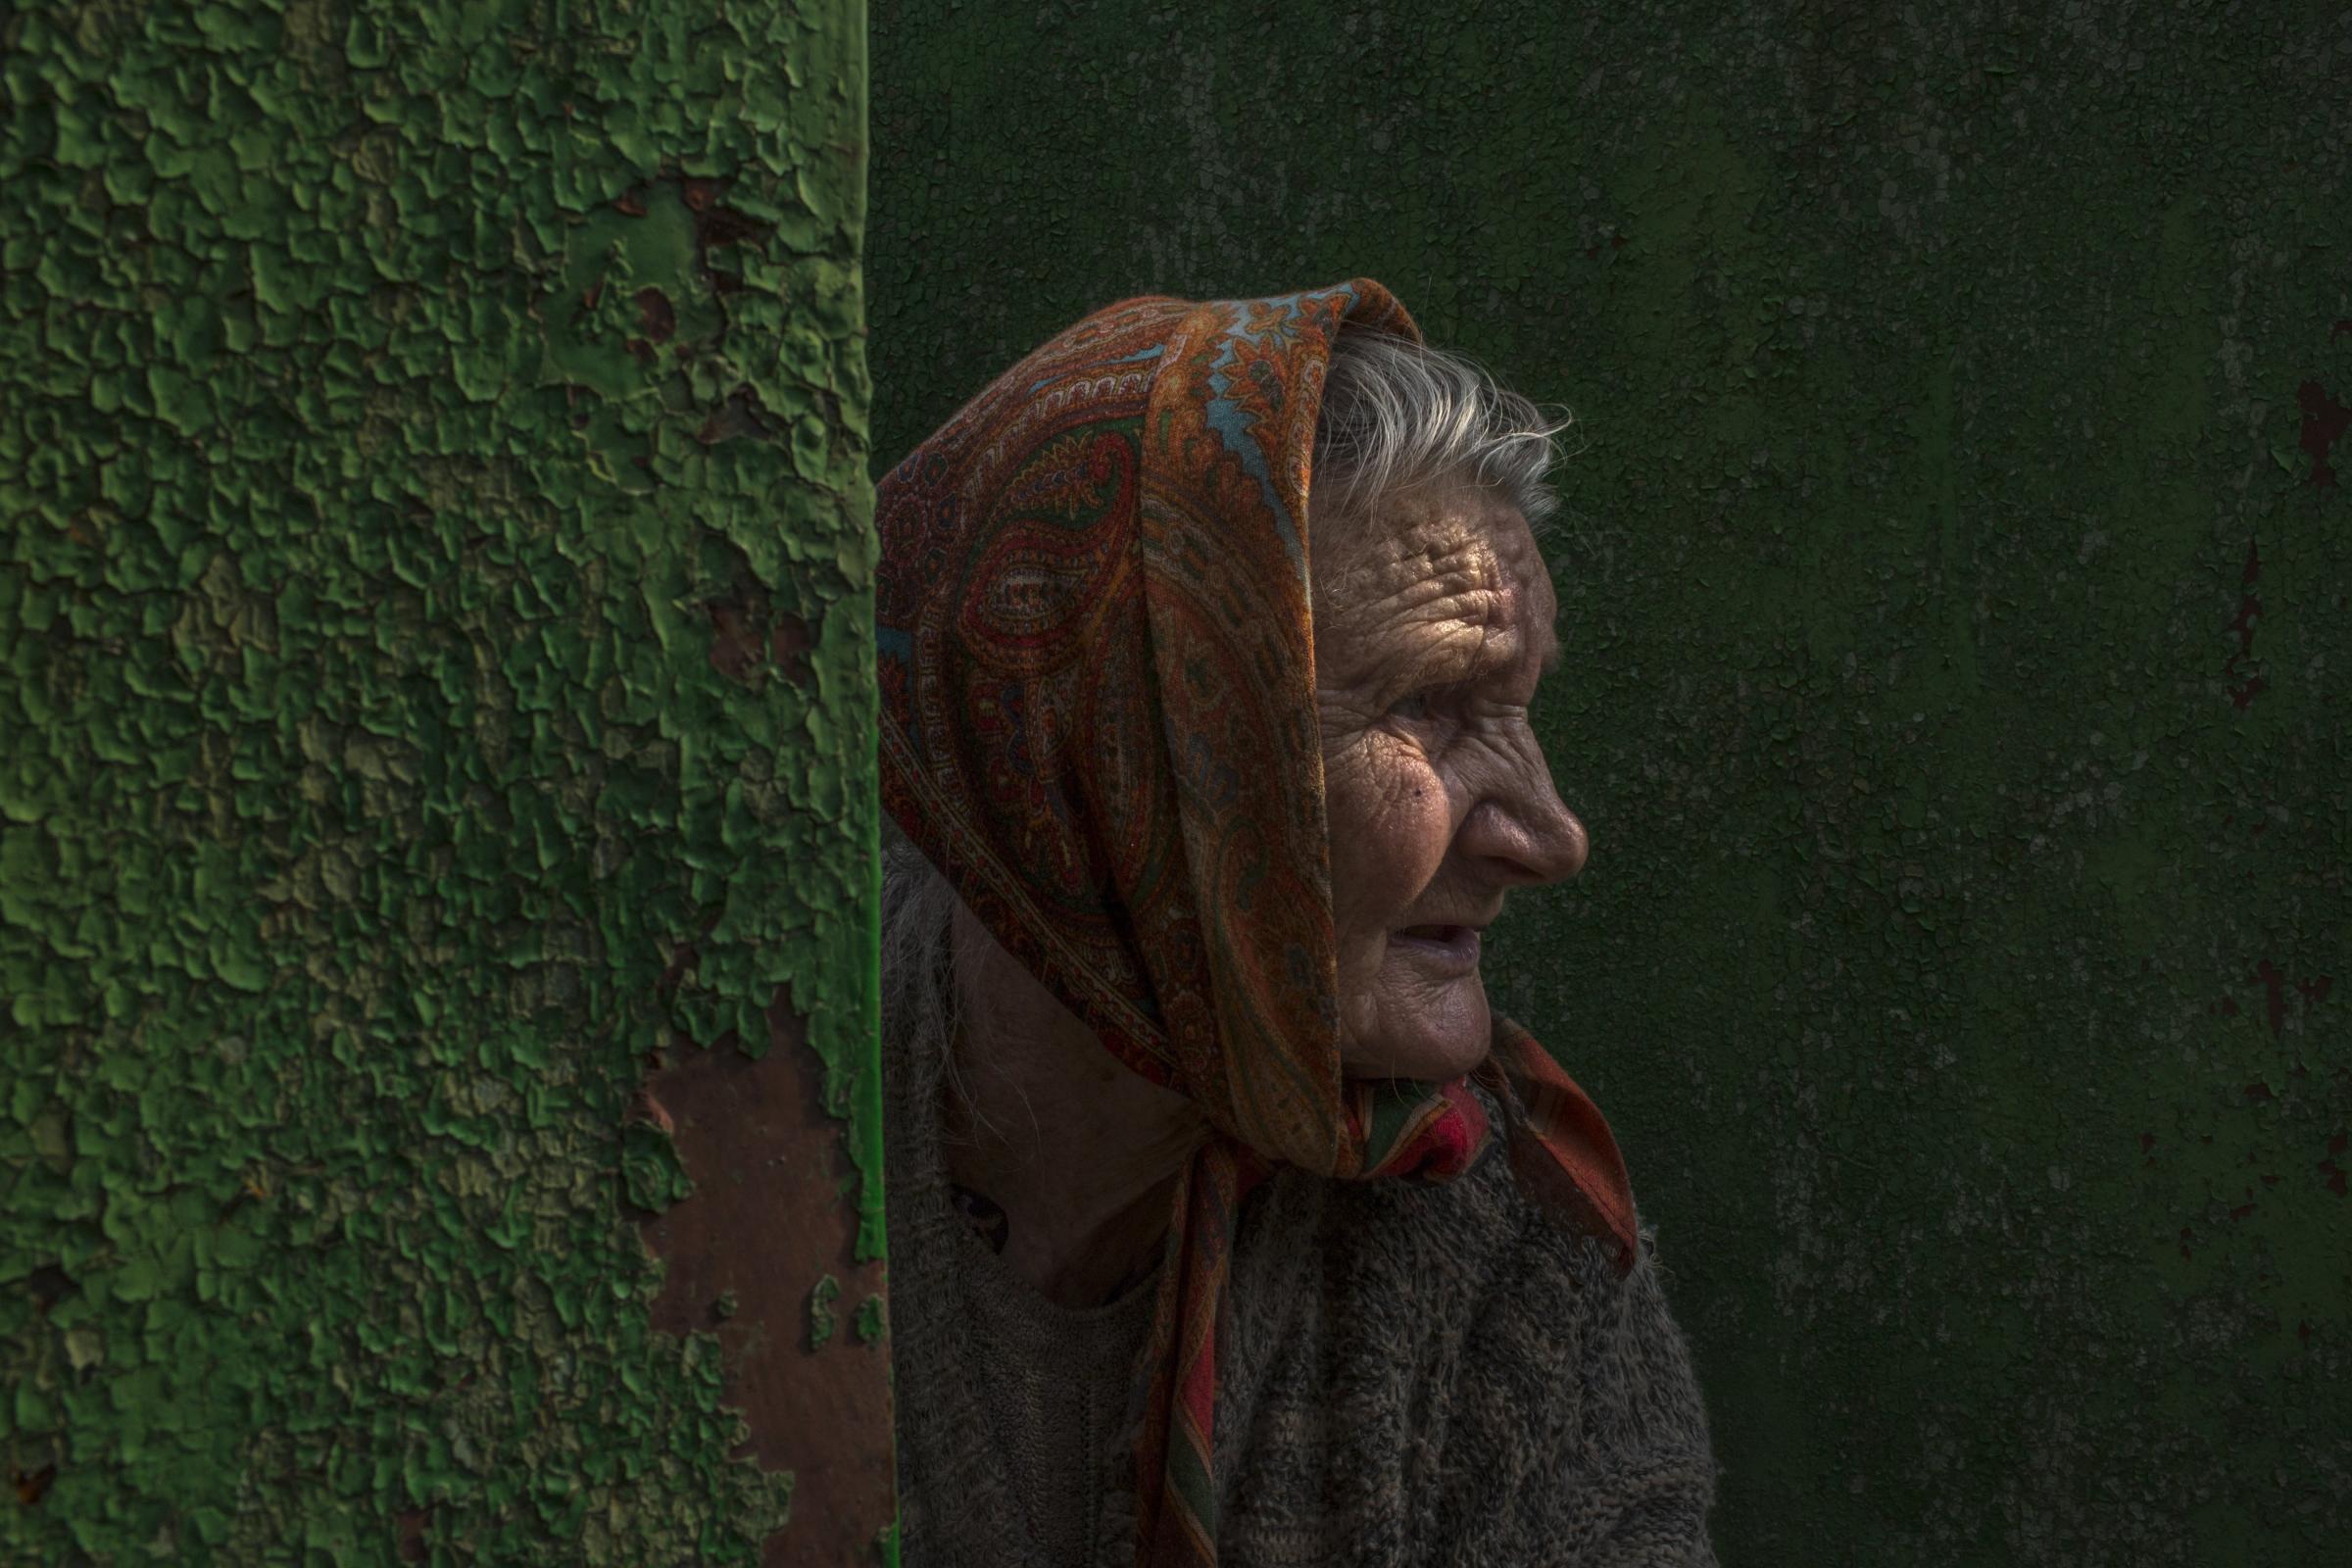 Nadezda Ivanovna peers through the gate of her home, on the outskirts of Slovyansk, Ukraine.